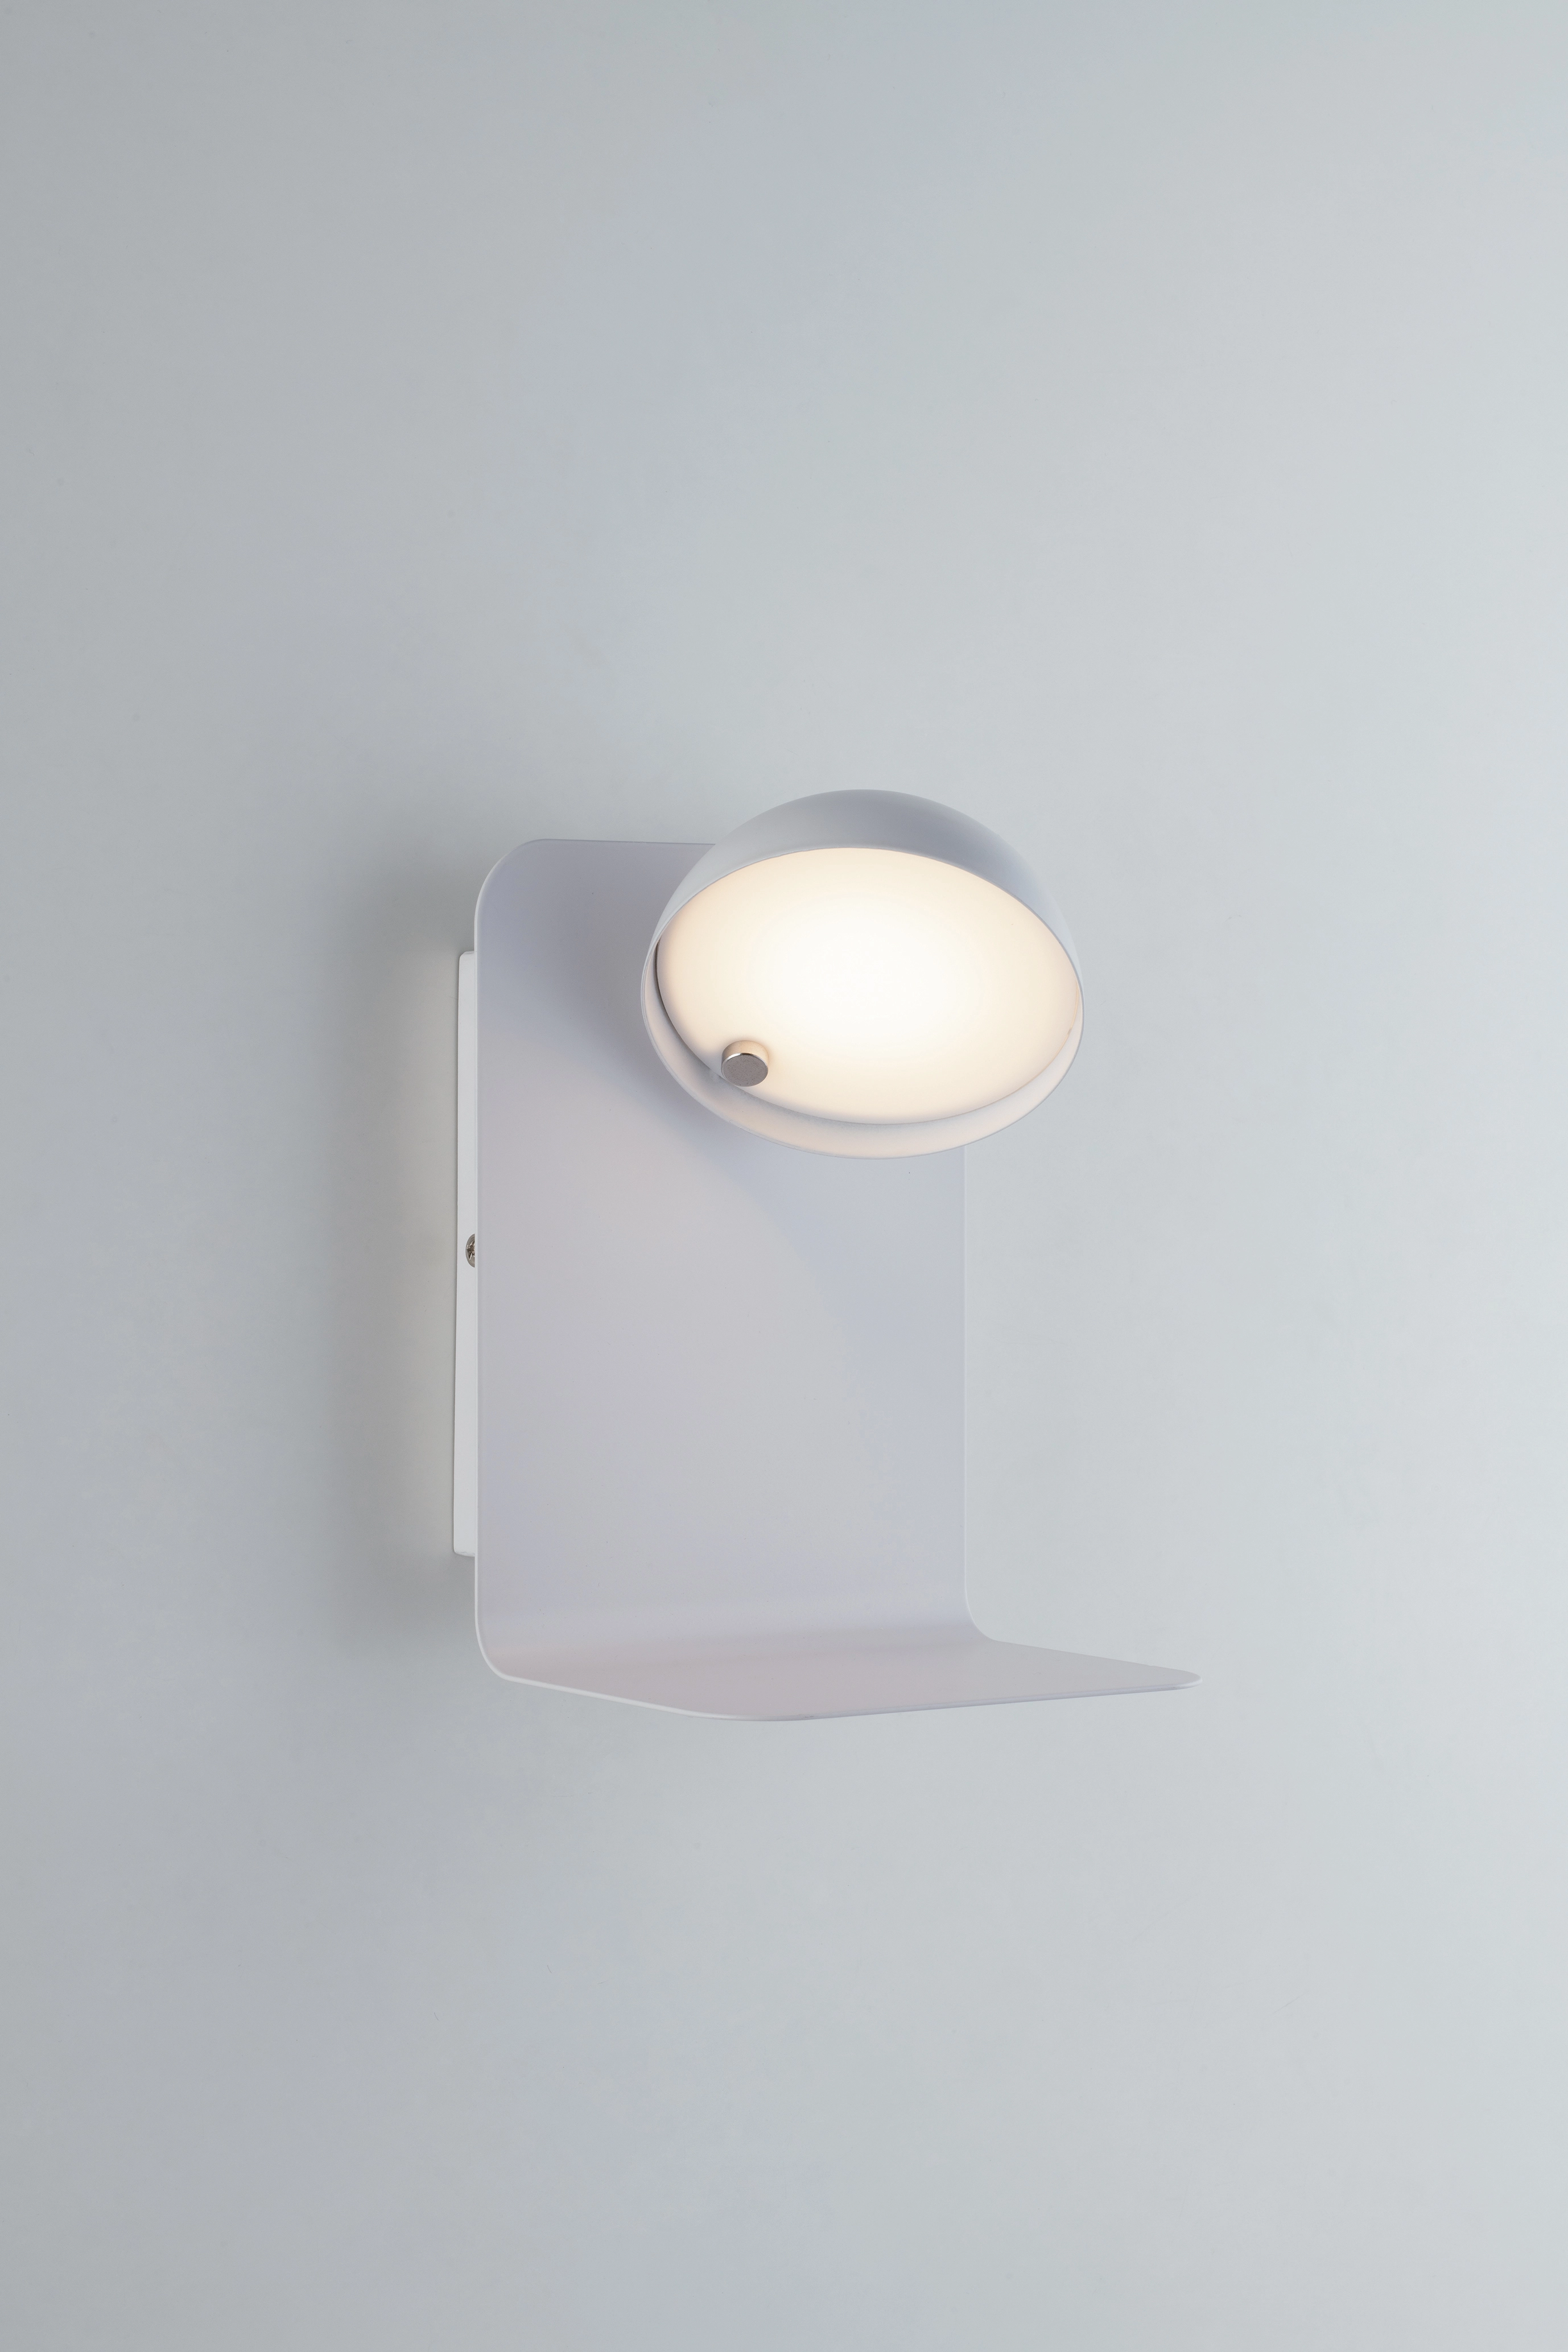 Luce Design Wandleuchte-Boing 1-flammig Weiß 32 cm x 19 cm kaufen bei OBI